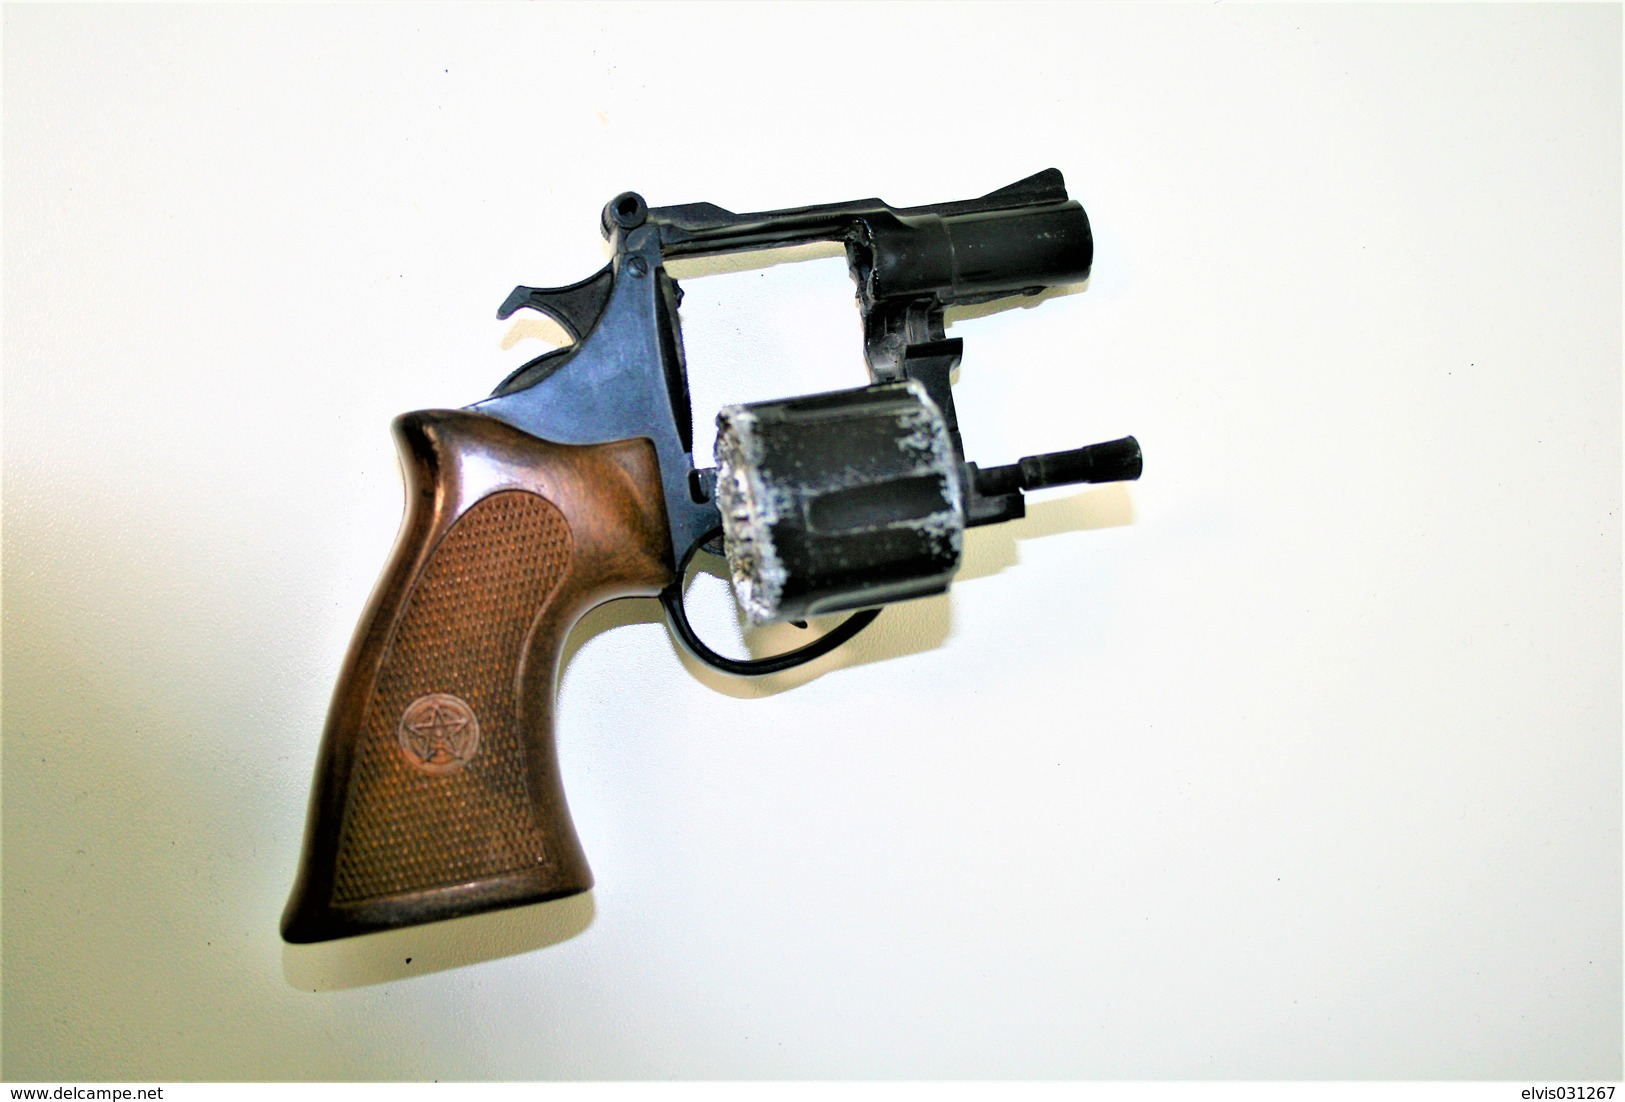 Vintage TOY GUN : KAT80181-1 By Edison Giocattoli - L=16cm - 19??s - Keywords : Cap Gun - Cork - Revolver - Pistol - Decorative Weapons